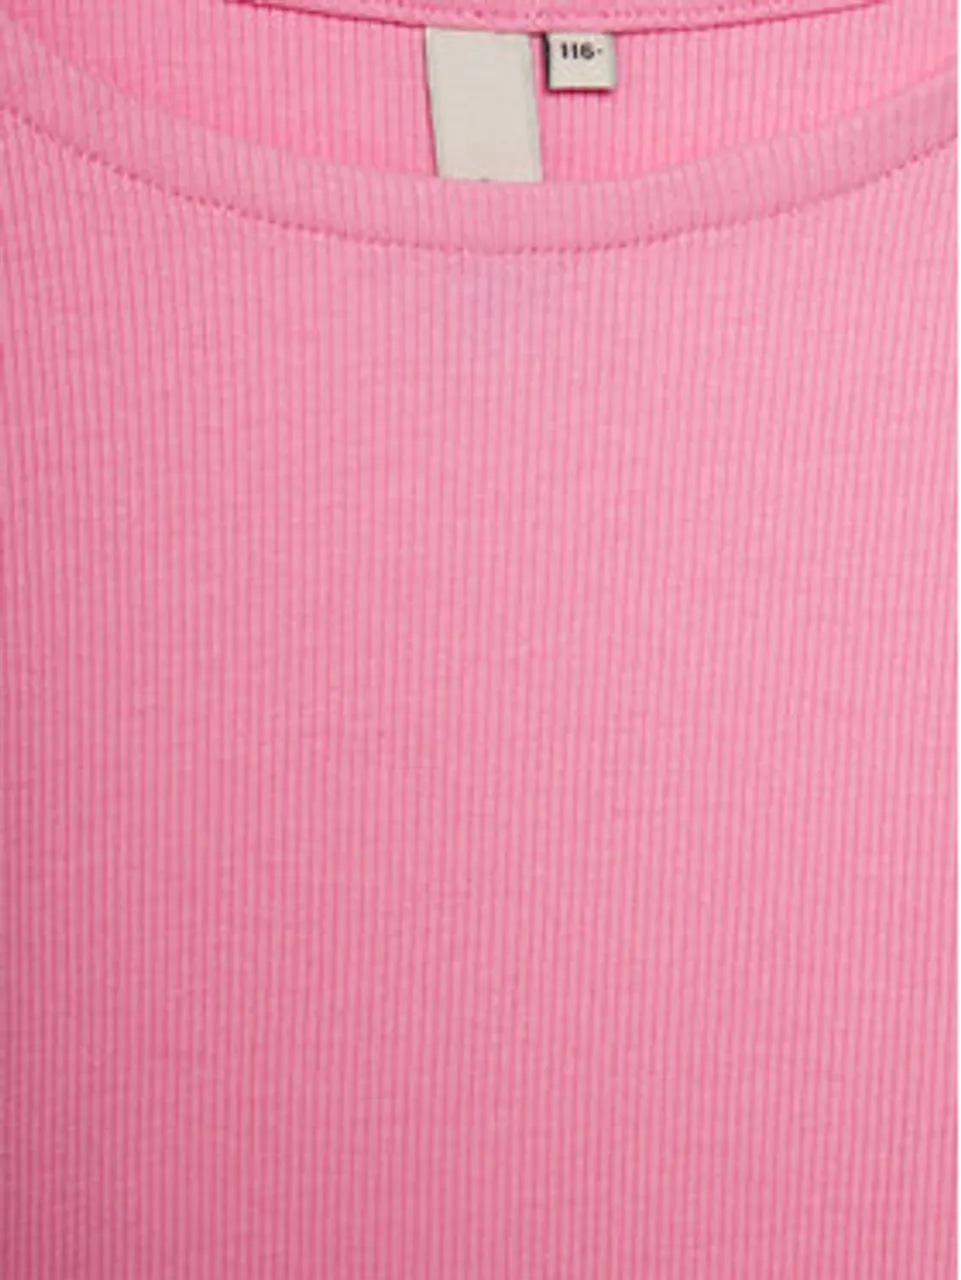 Pieces KIDS T-Shirt Tania 17136158 Rosa Slim Fit